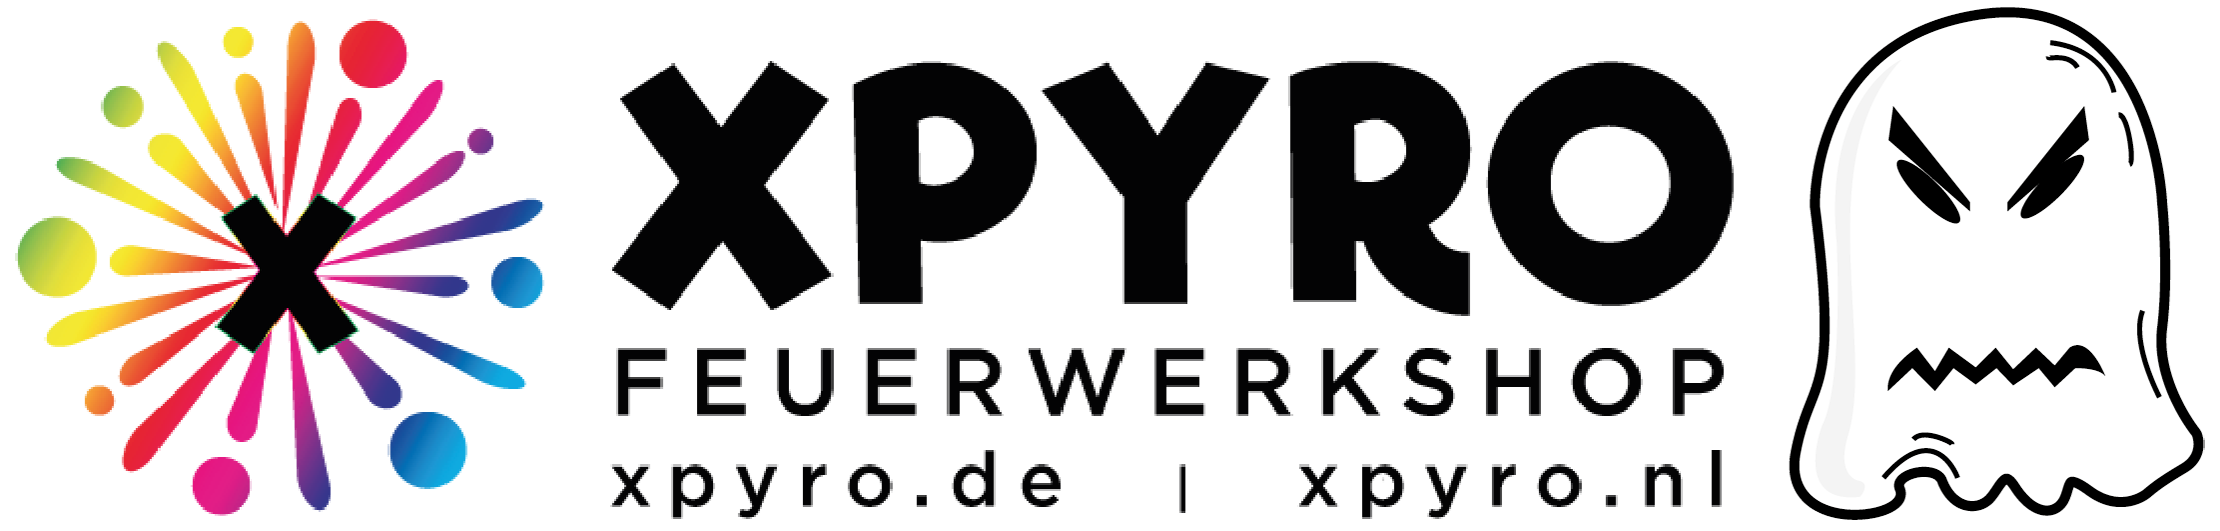 www.xpyro.de